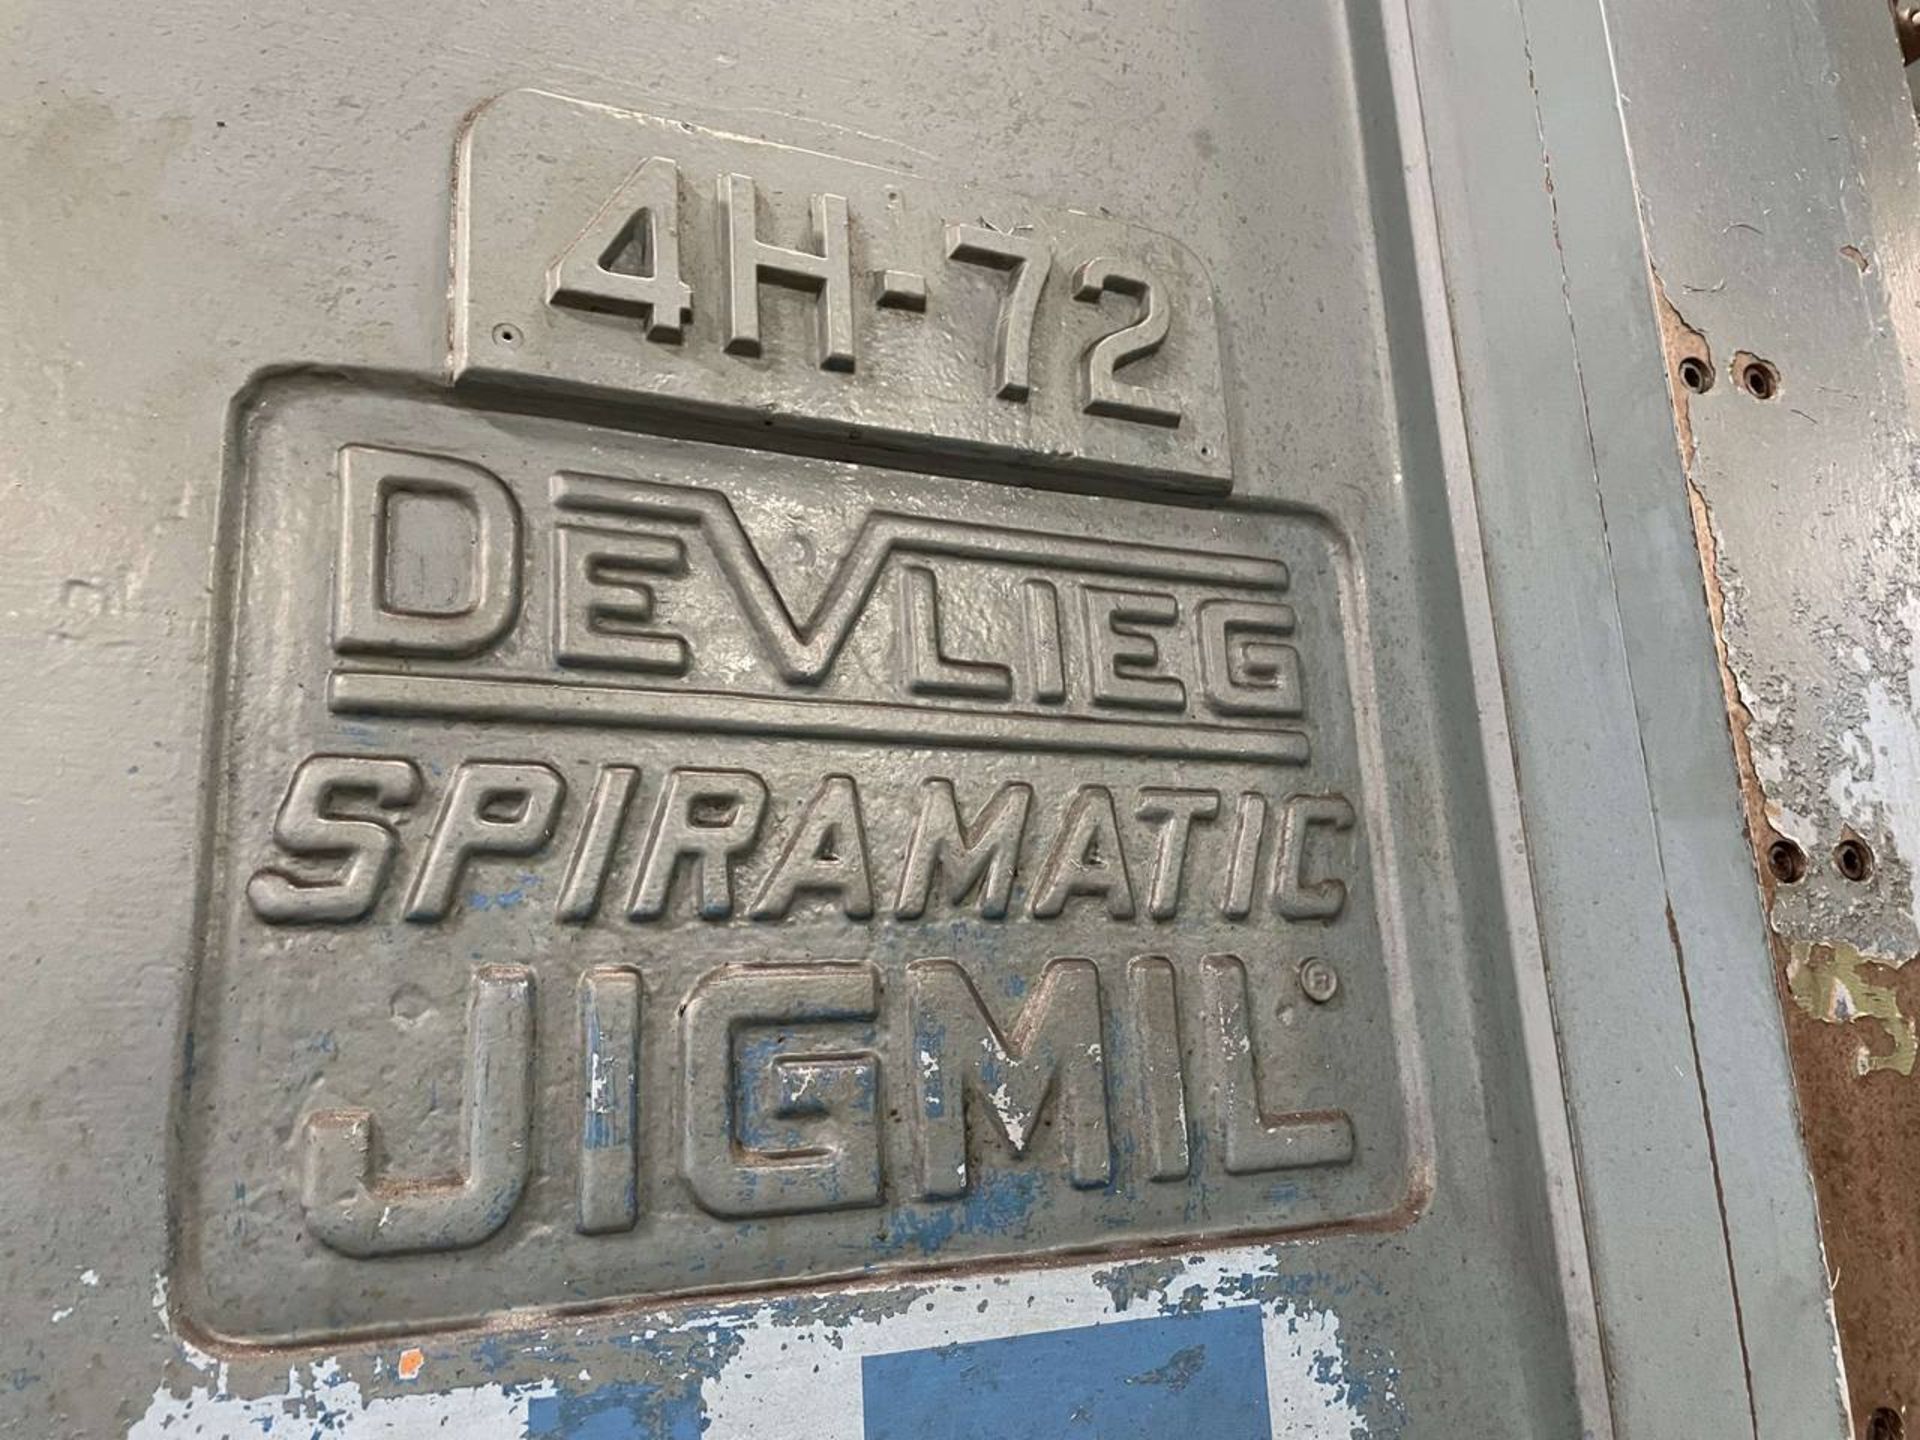 DeVlieg 4H-72 CNC Spiramatic Jigmil - Image 8 of 9